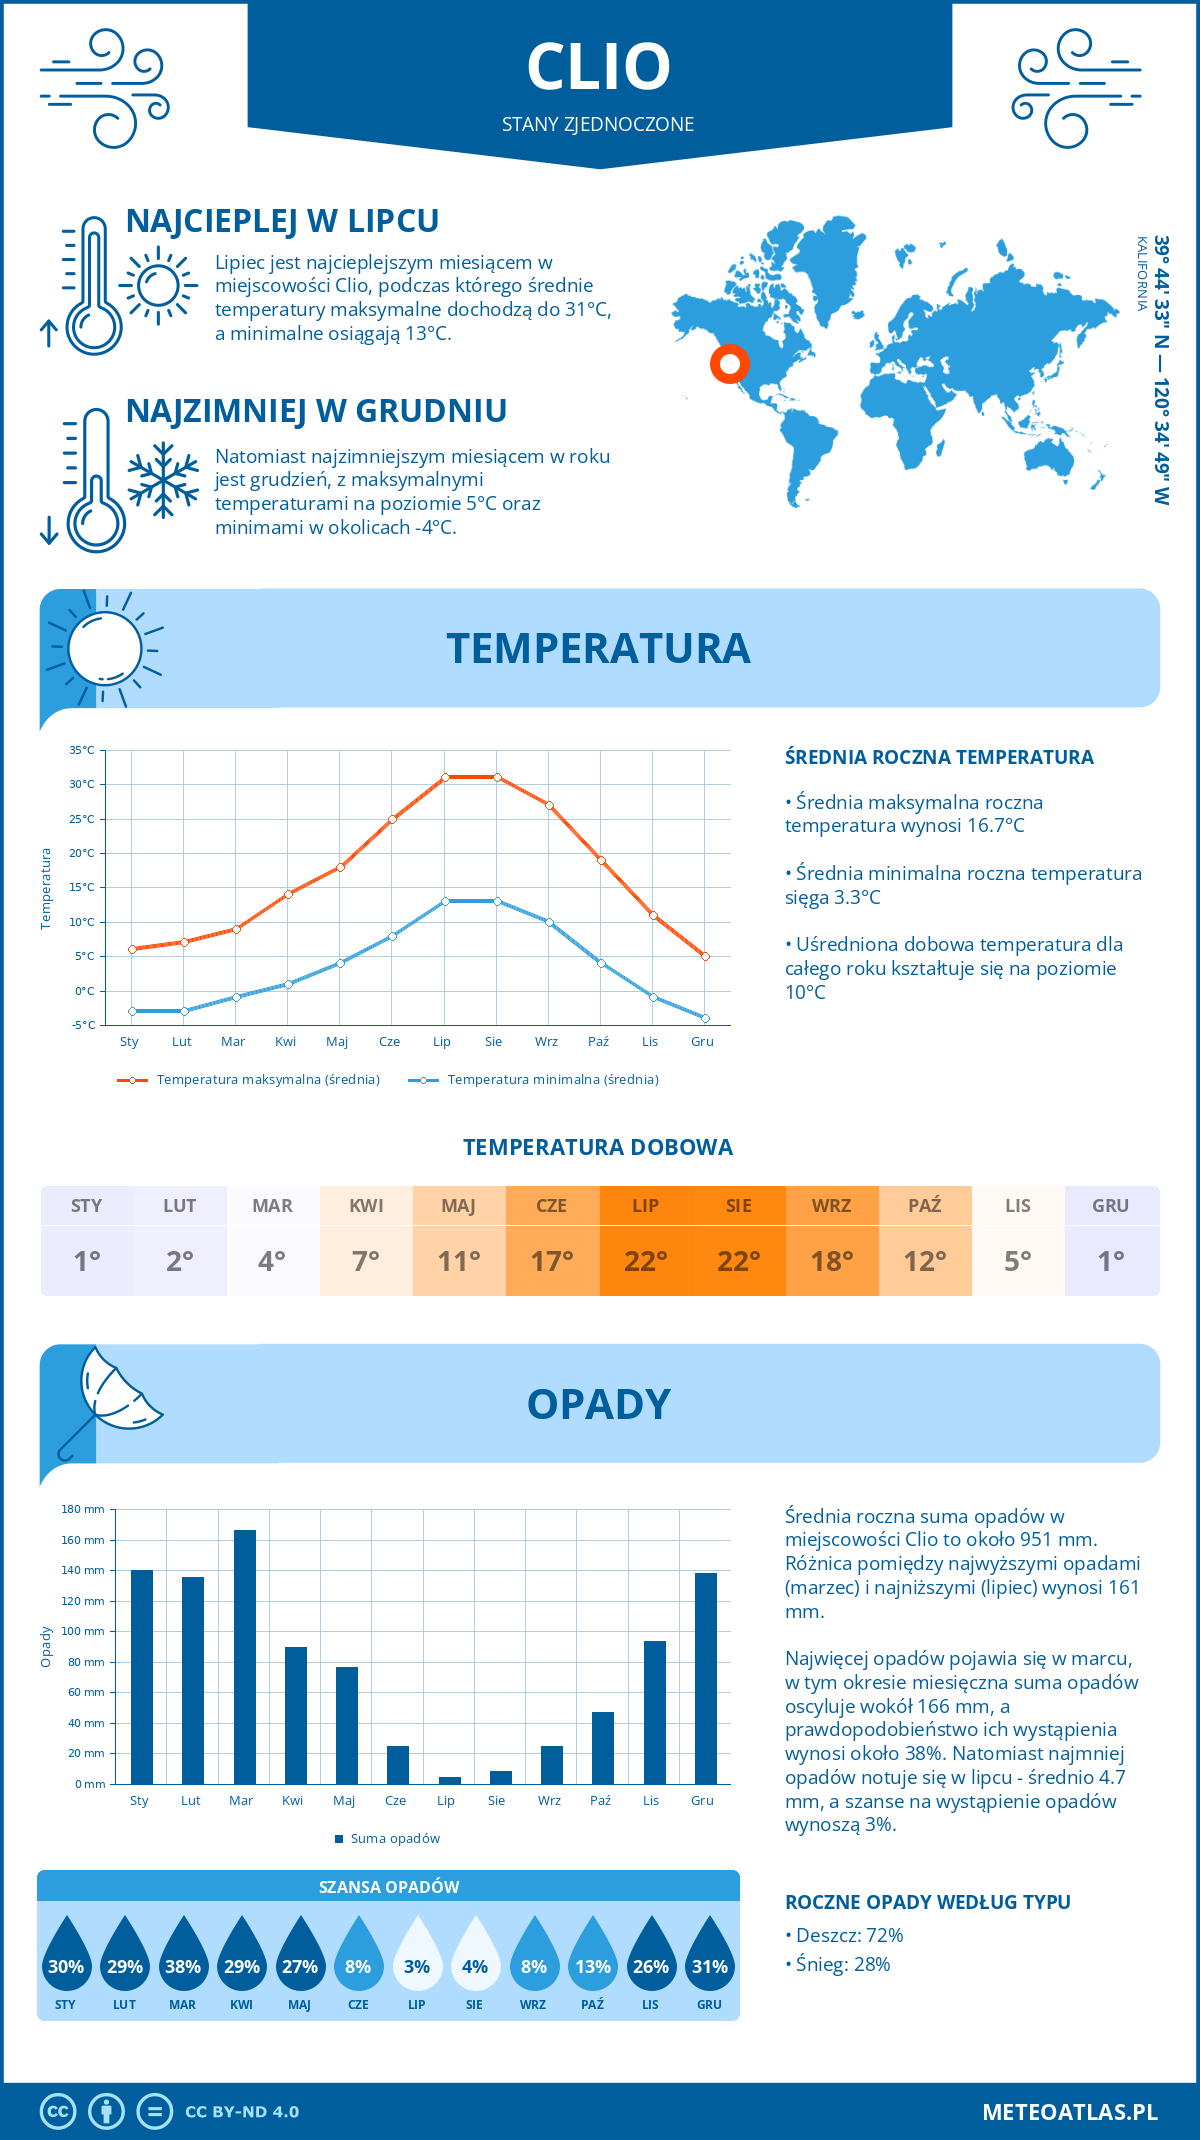 Pogoda Clio (Stany Zjednoczone). Temperatura oraz opady.